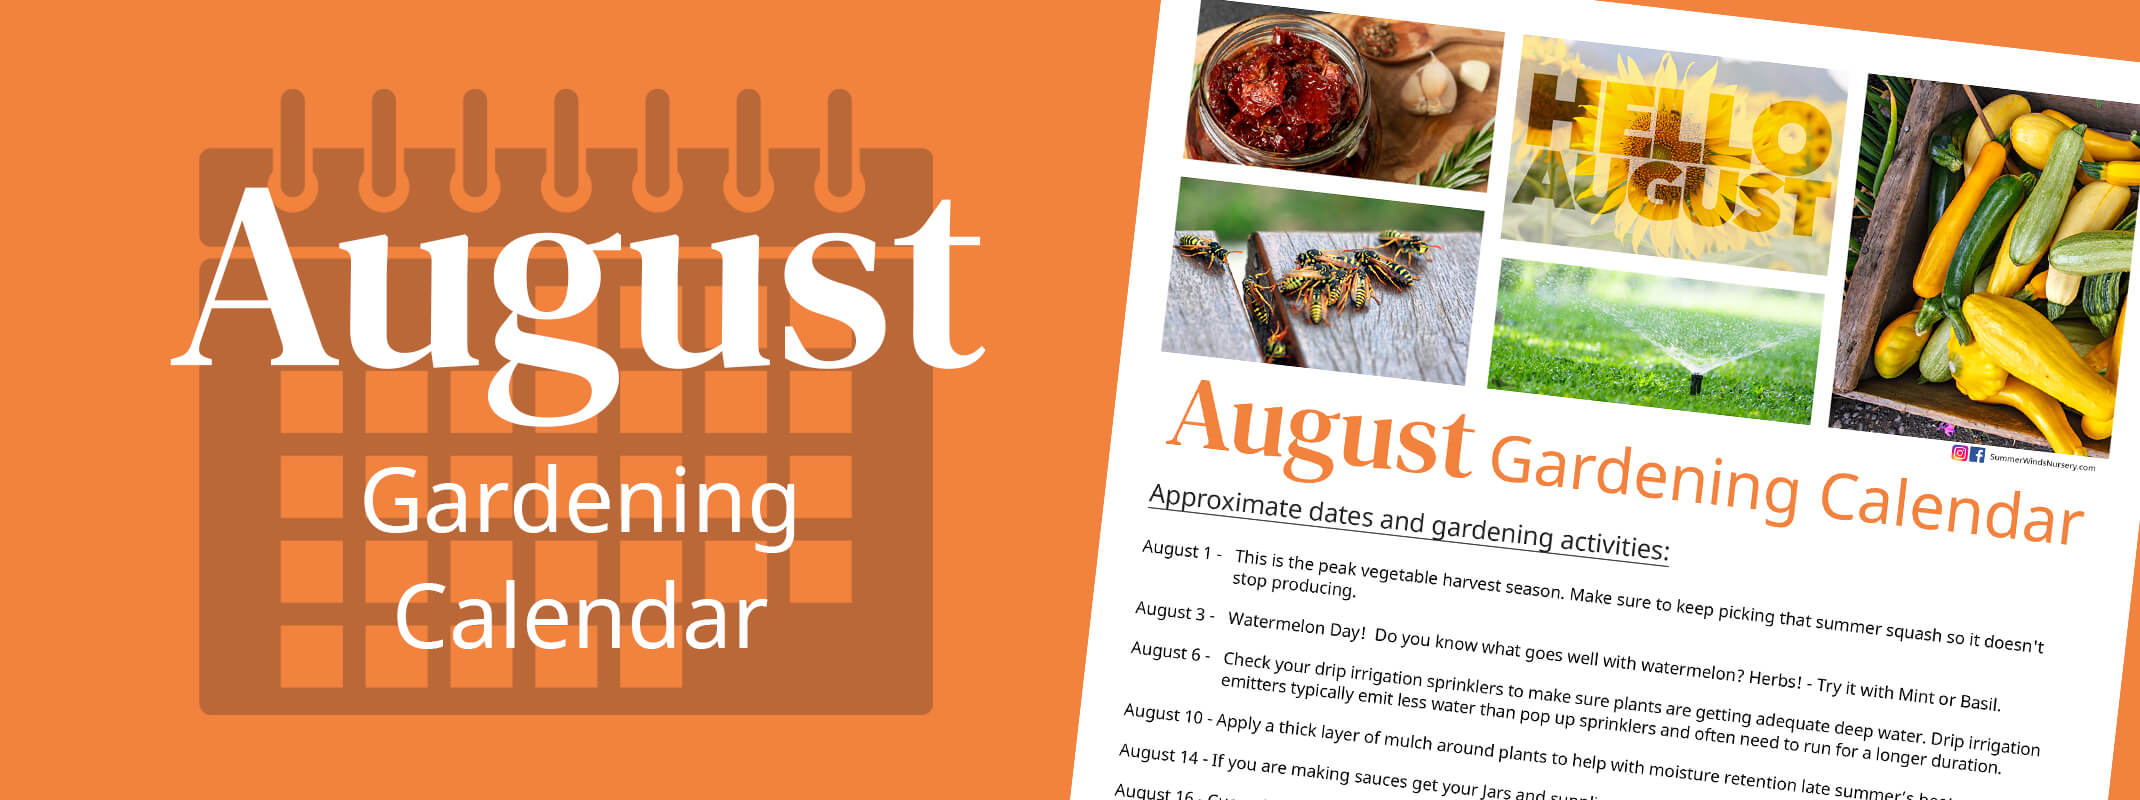 August gardening calendar banner